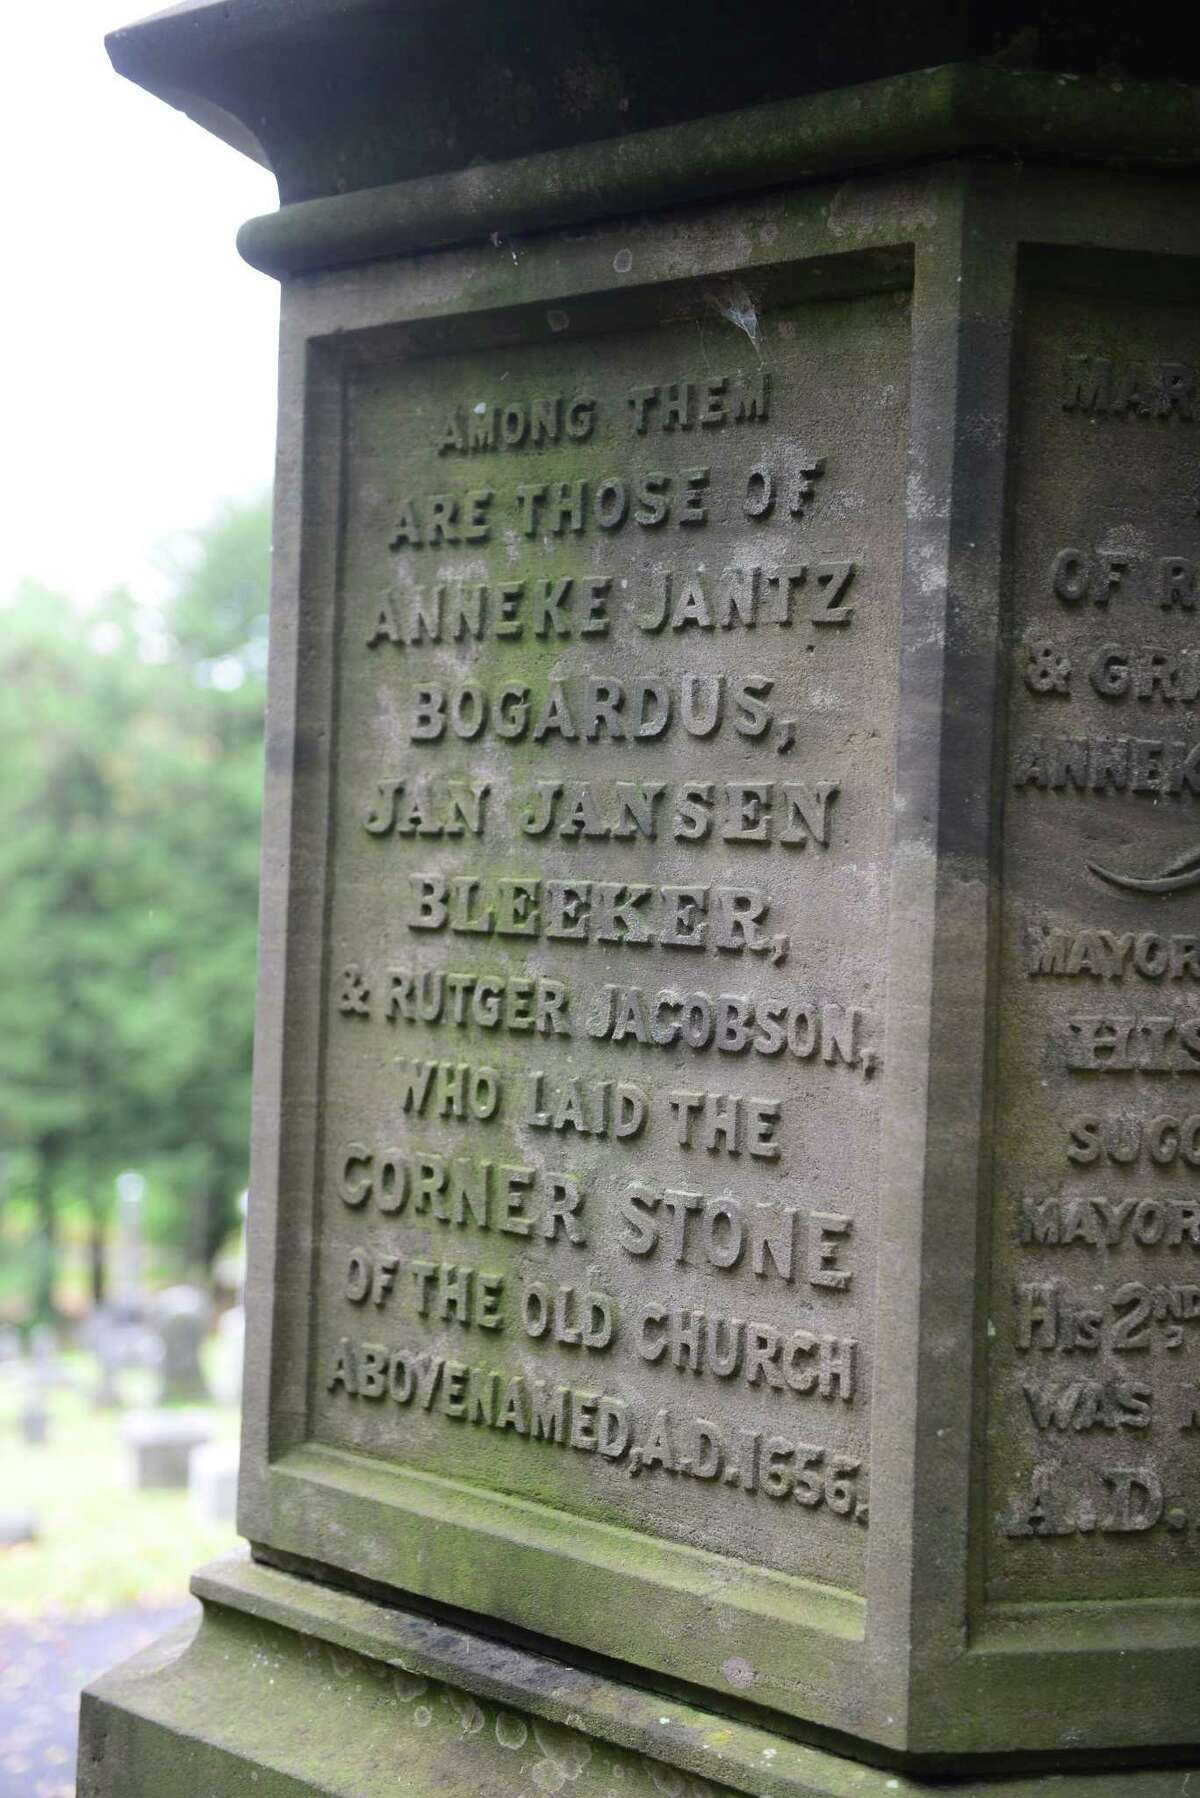 A detail of the Bleecker grave marker. 